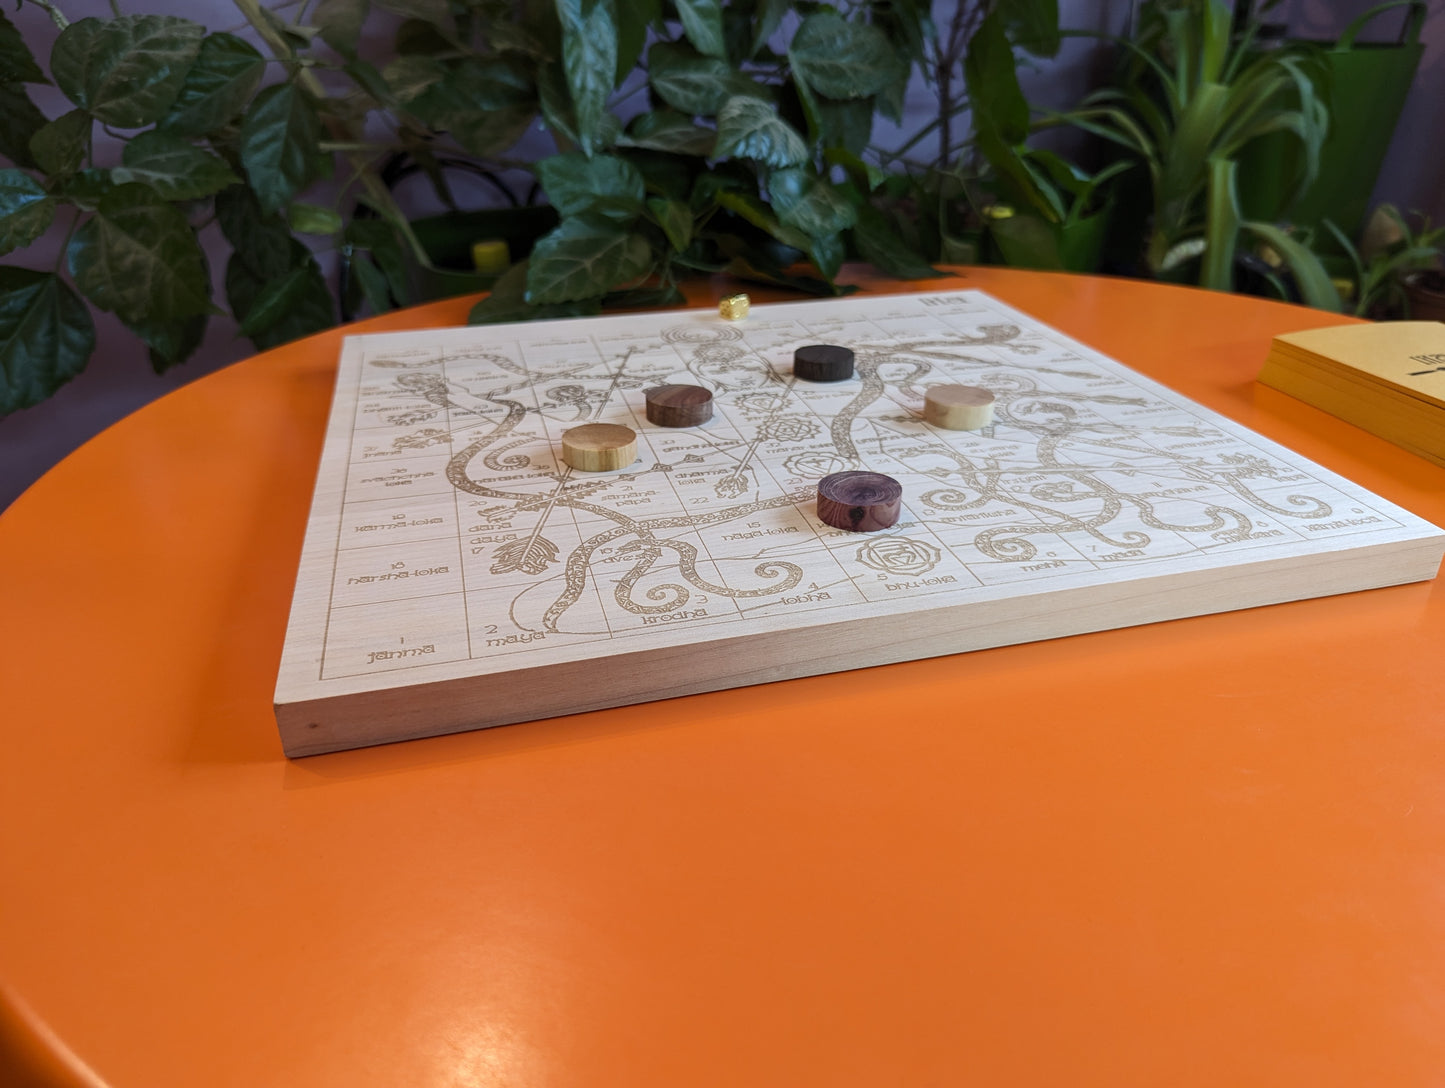 15" wooden Leela game set. Yoga board game of self-knowledge.